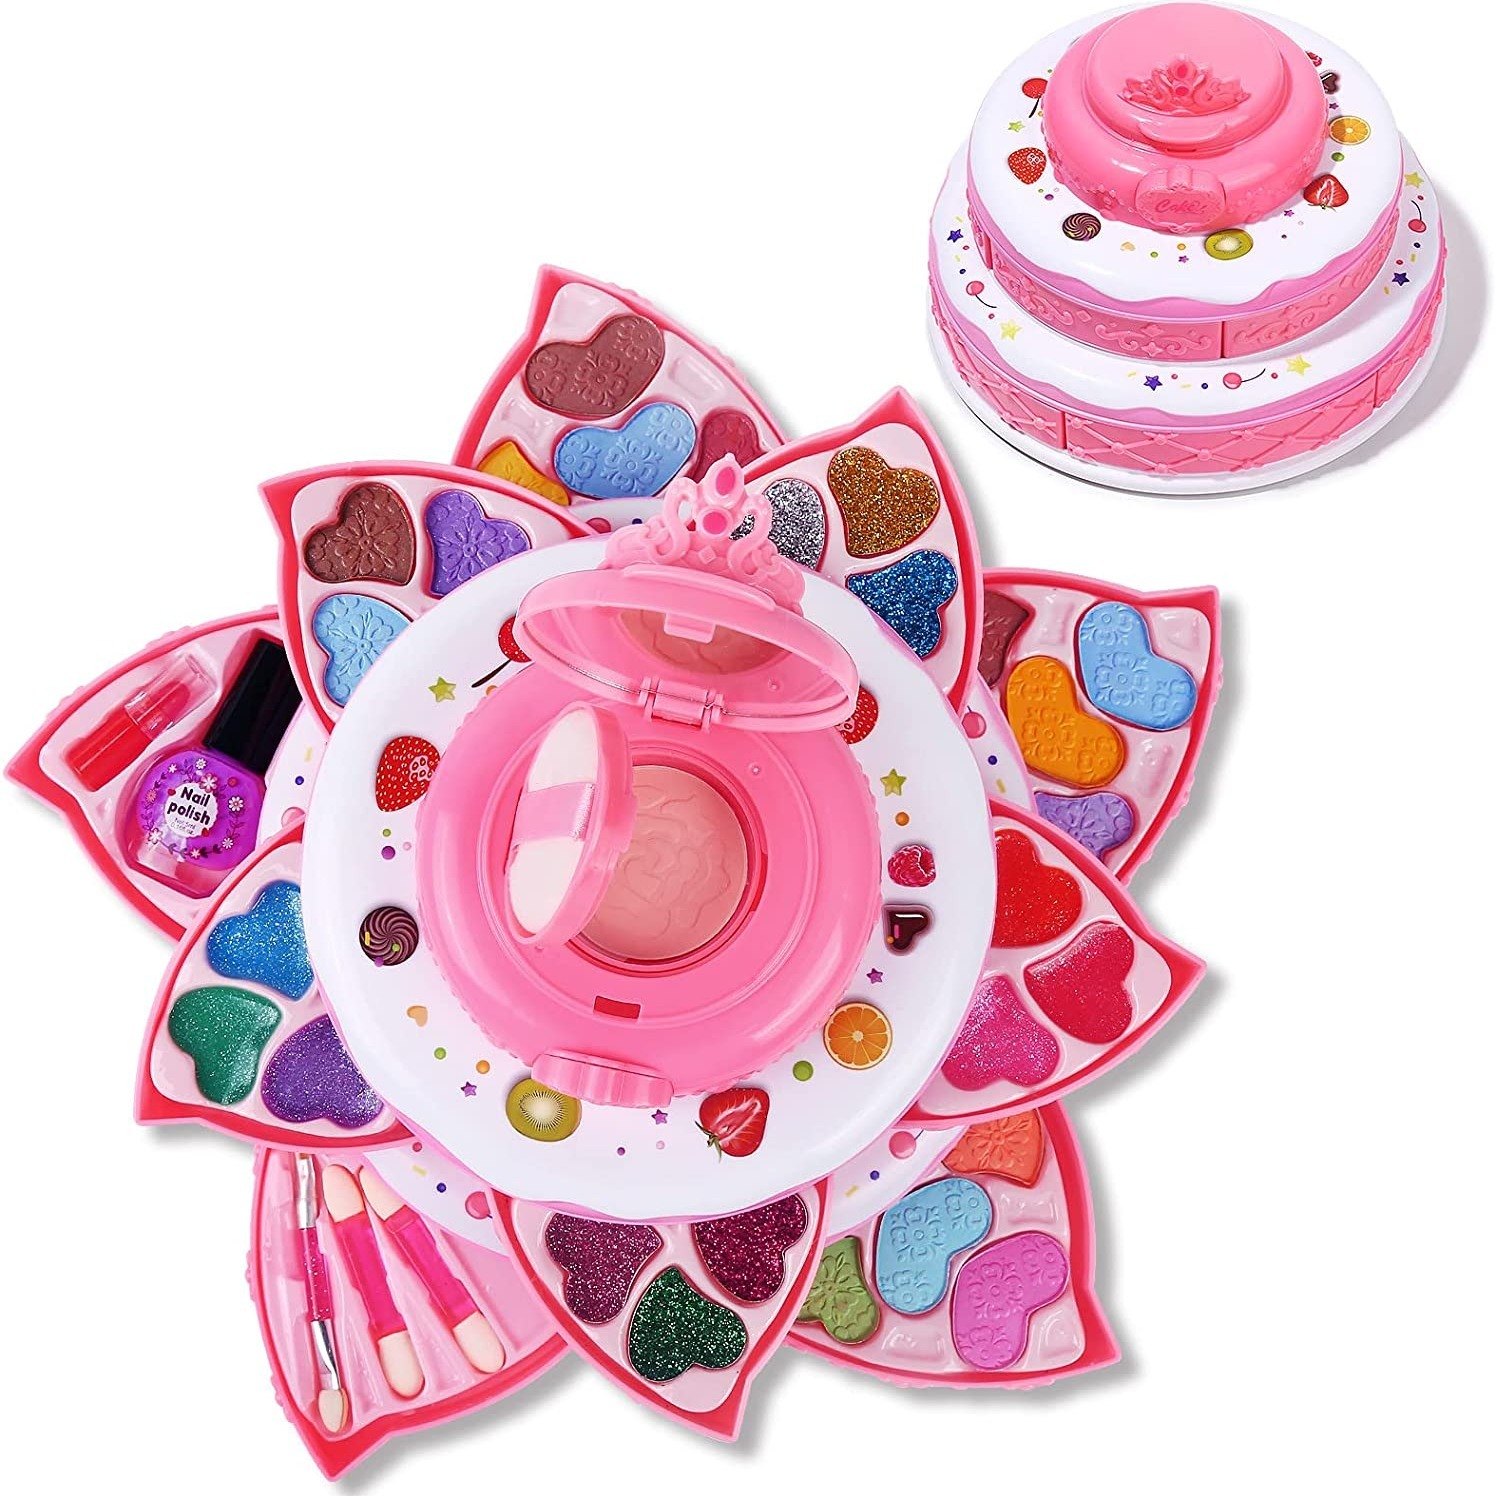 Hollyhi 65 Pcs Kids Makeup Kit for Girl, Washable Play Makeup Toys